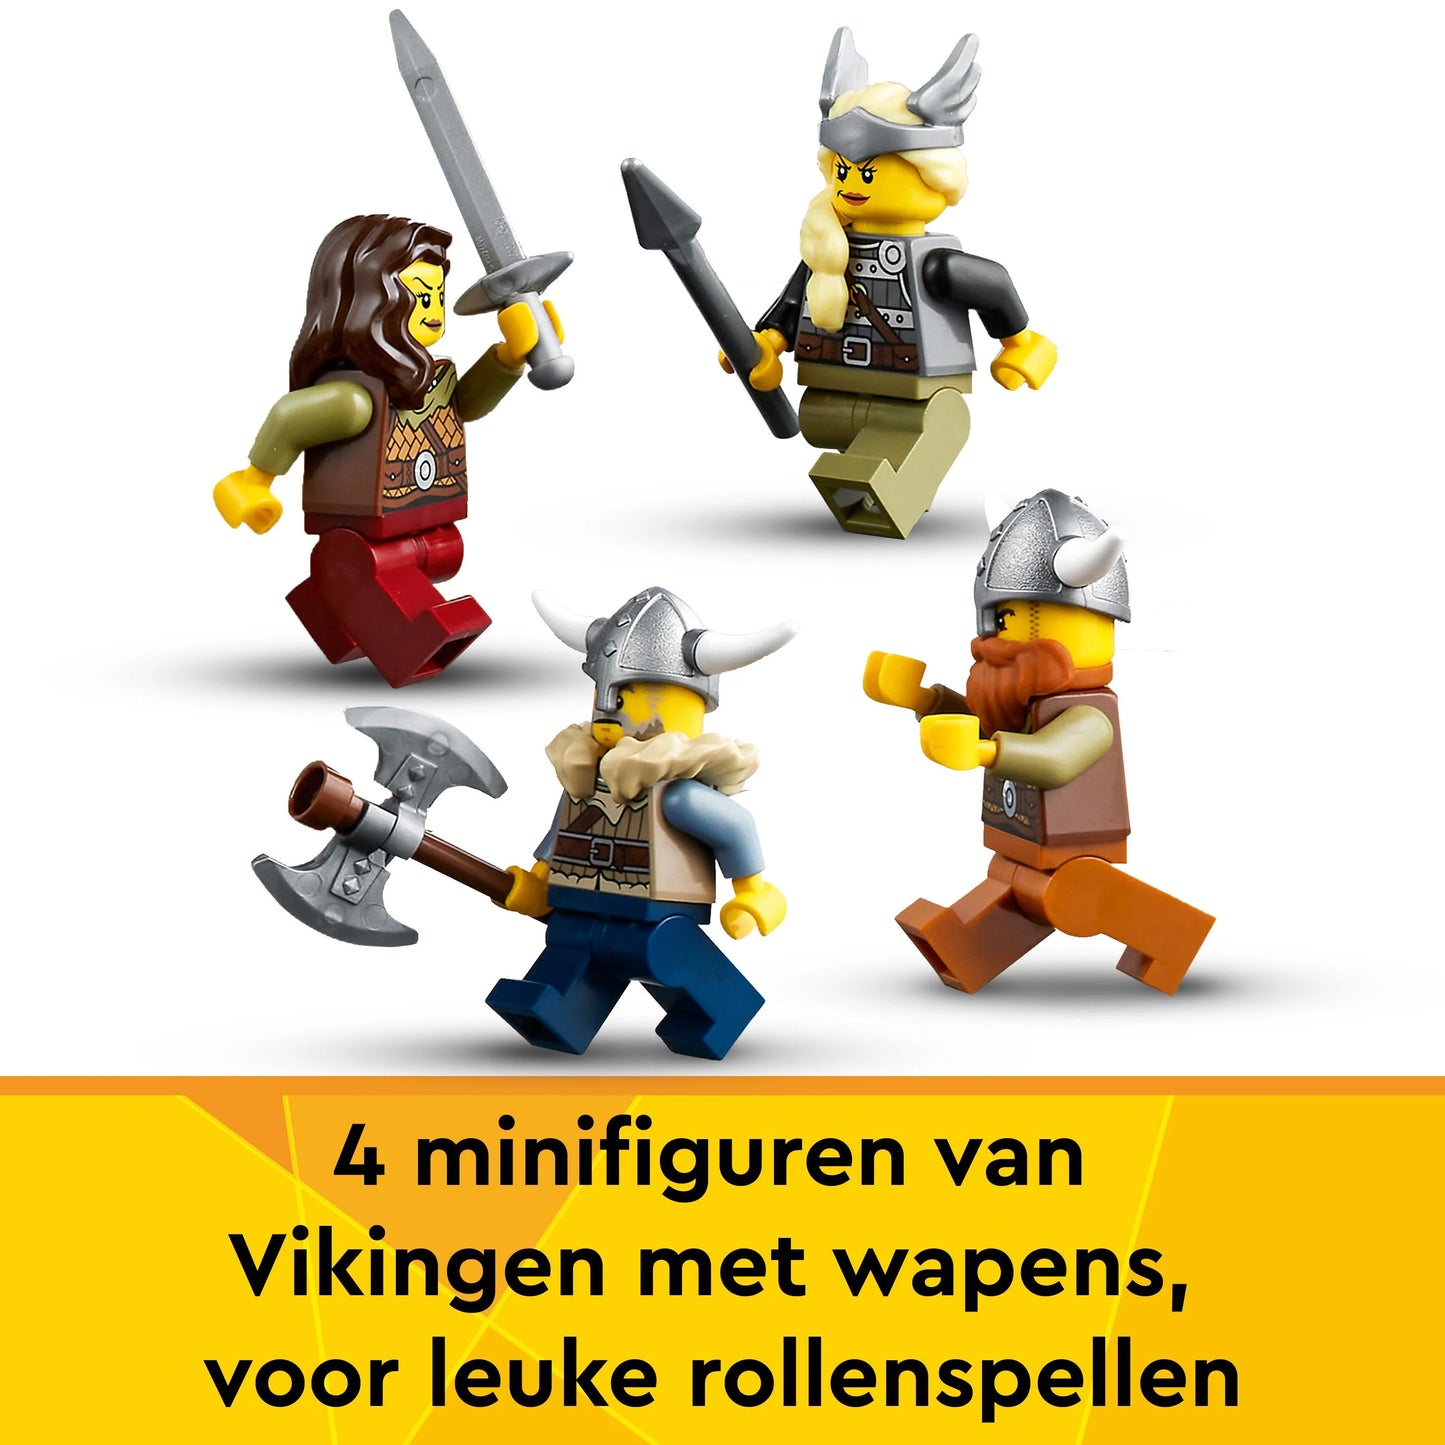 Viking Ship and the Midgard Serpent - LEGO Creator